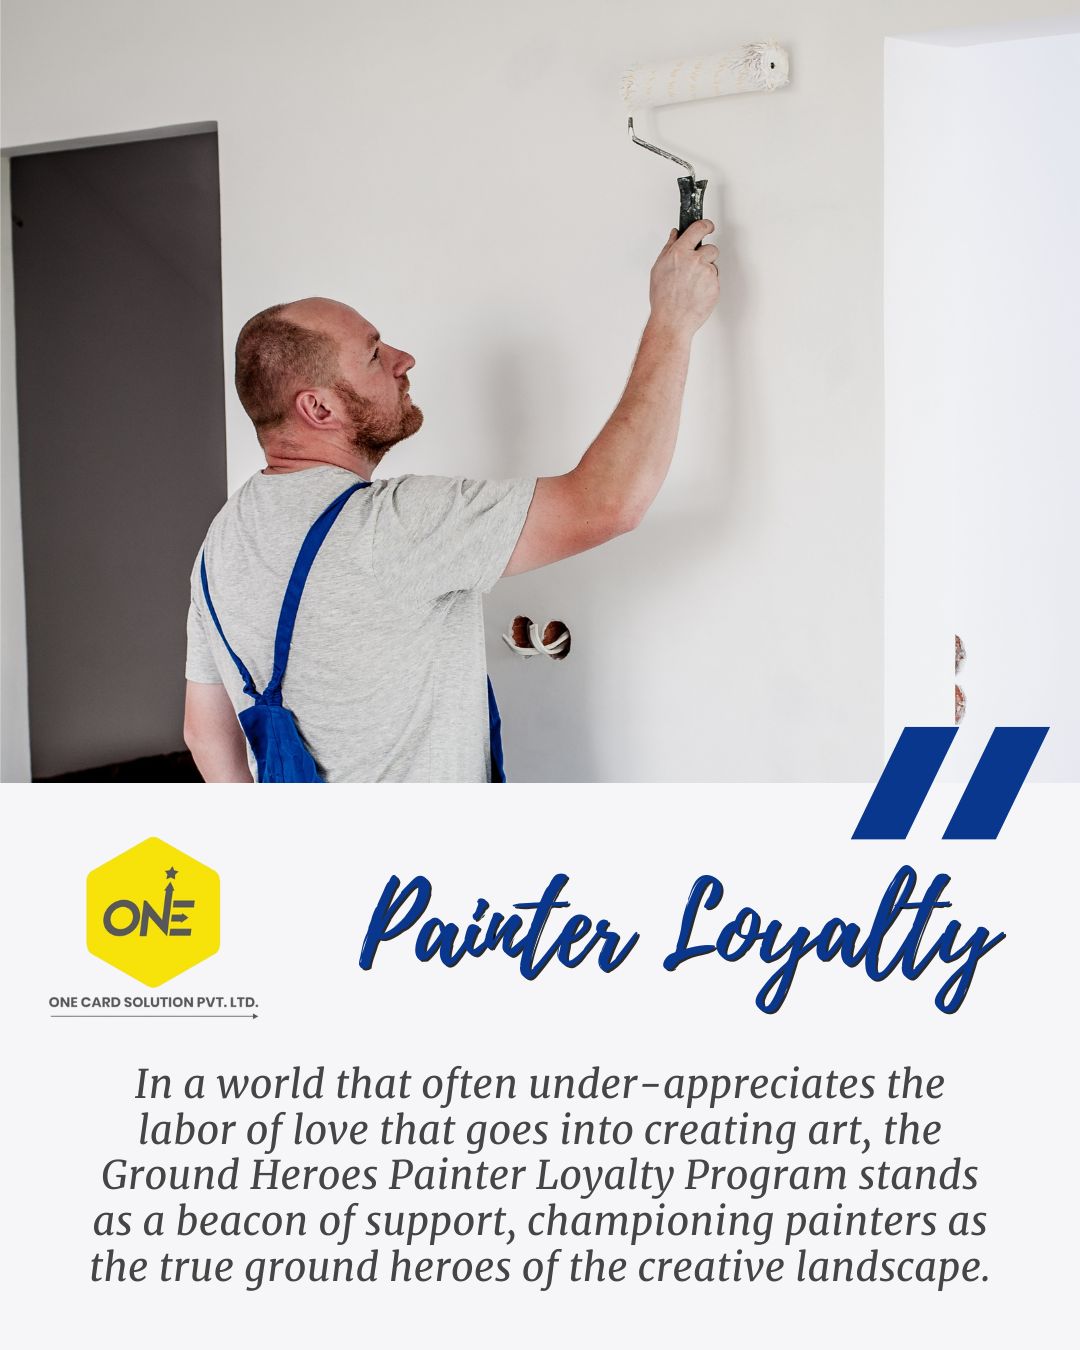 Ground Heroes “Painter” Loyalty Program